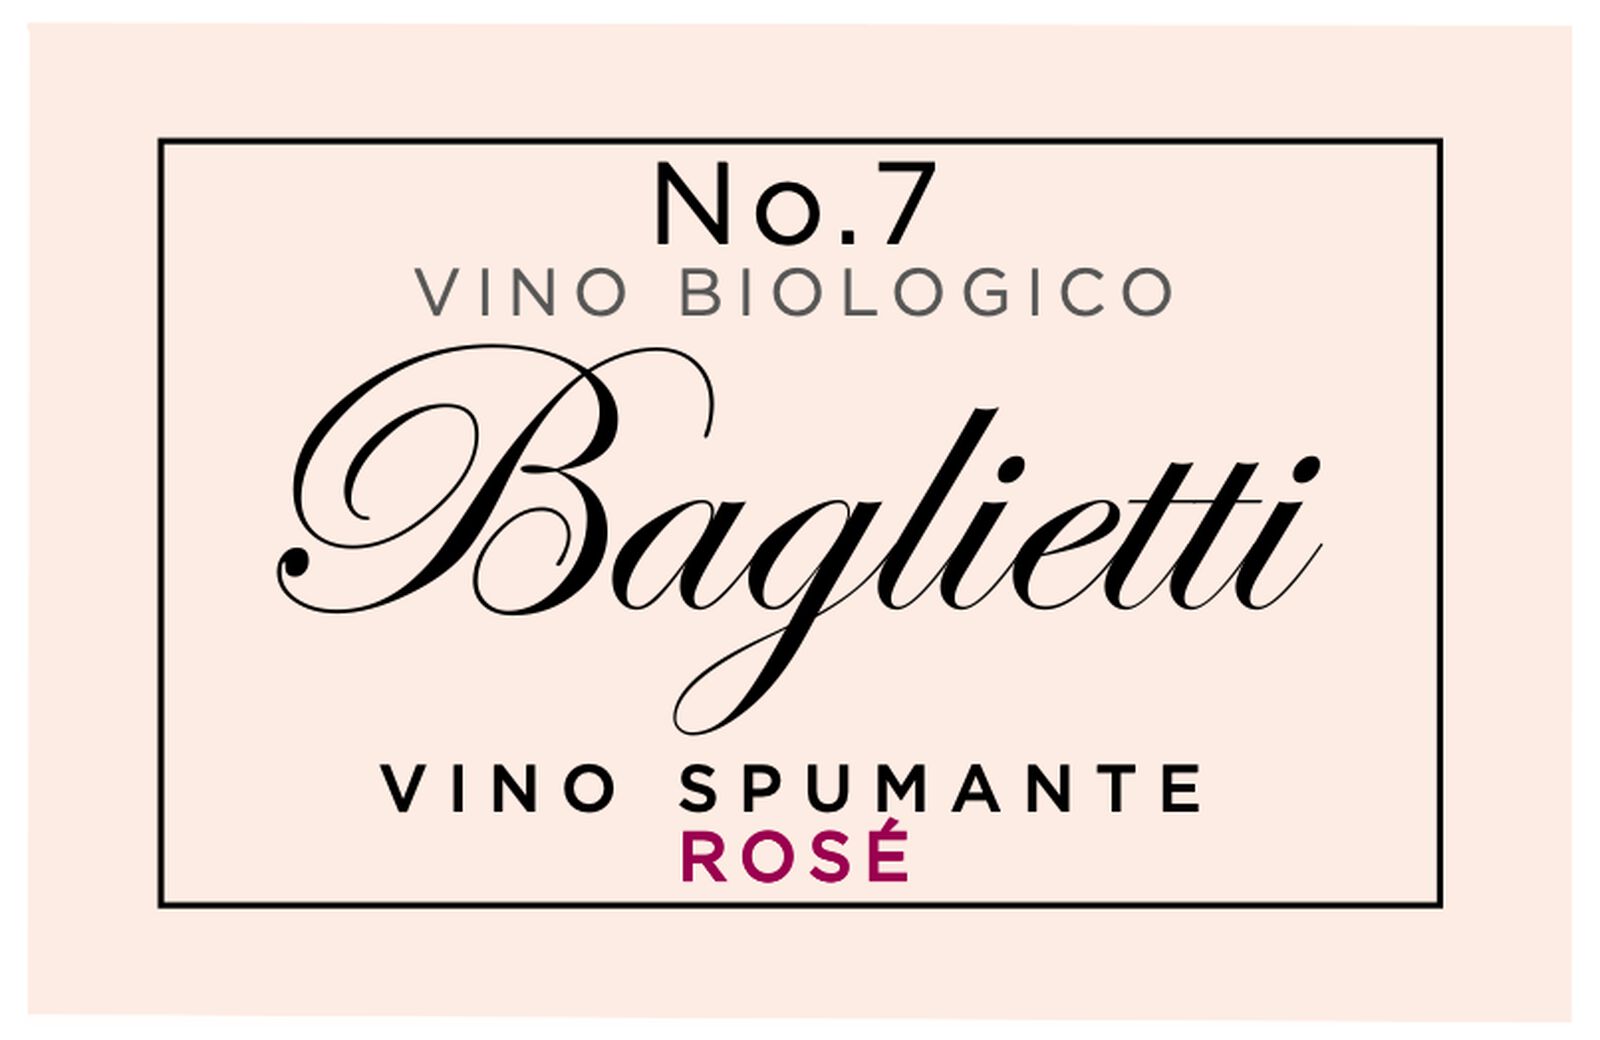 Baglietti Extra Dry Rosé Spumante N°7 biologique 0.75L - 17390161 - HEMA